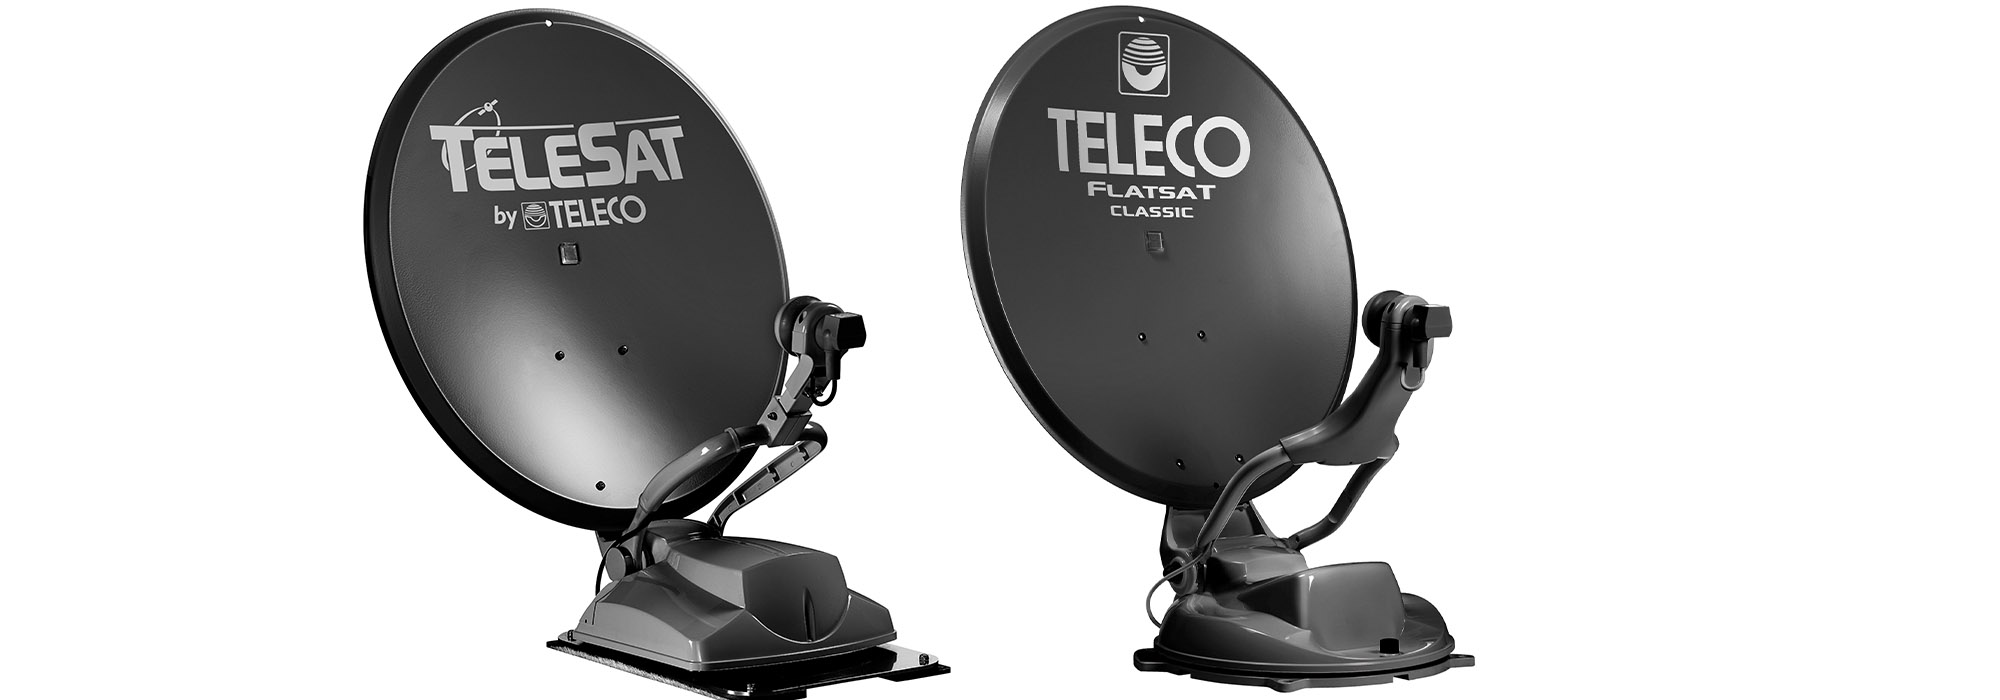 Teleco's Total Black range now includes the Flatsat Classic BT 65  and Telesat BT 65 automatic antennas